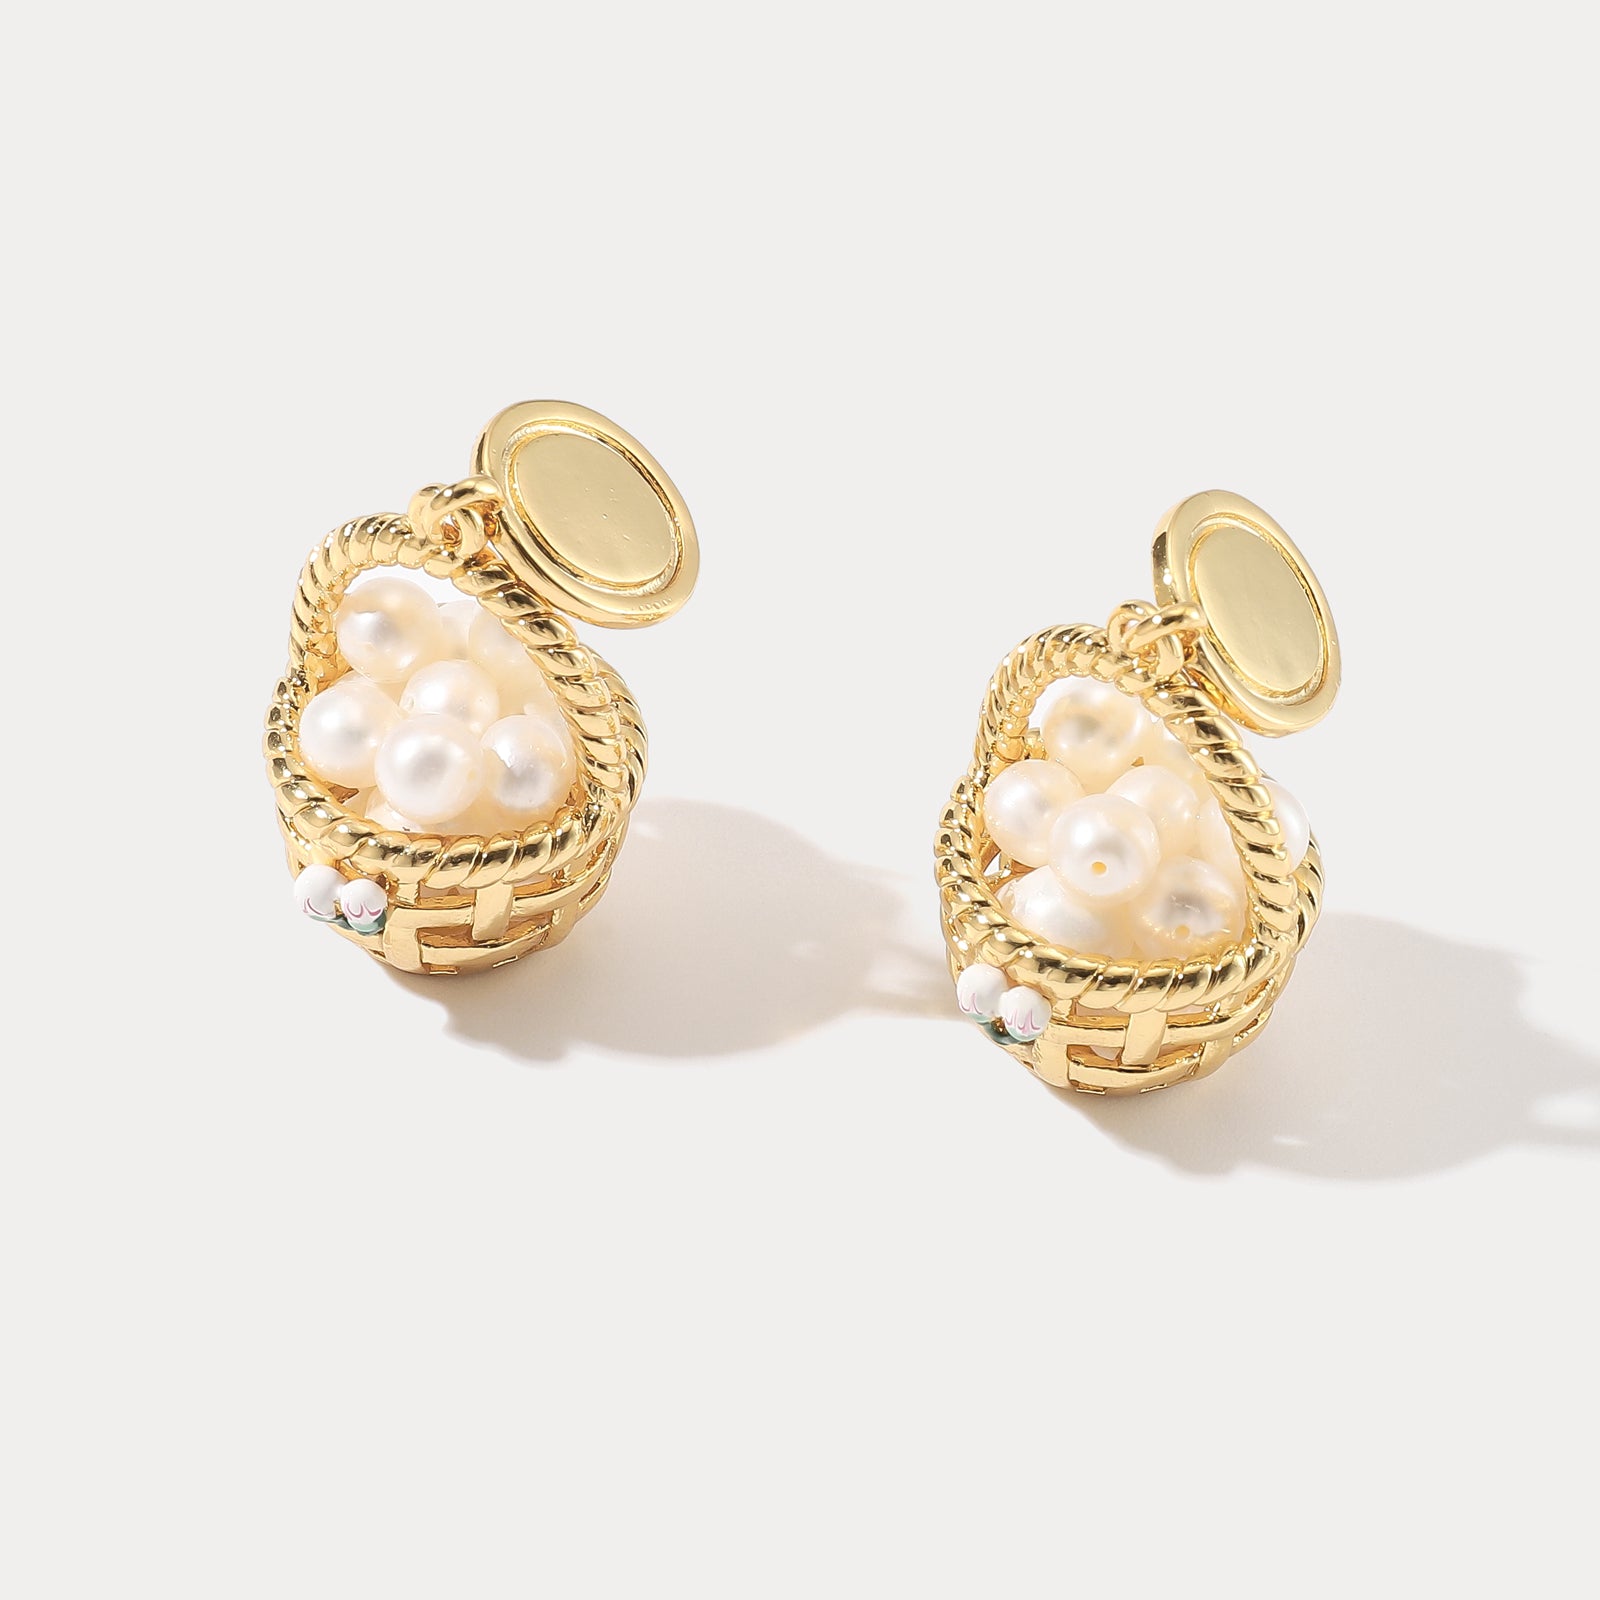 Baskets of Pearls Gold Earrings